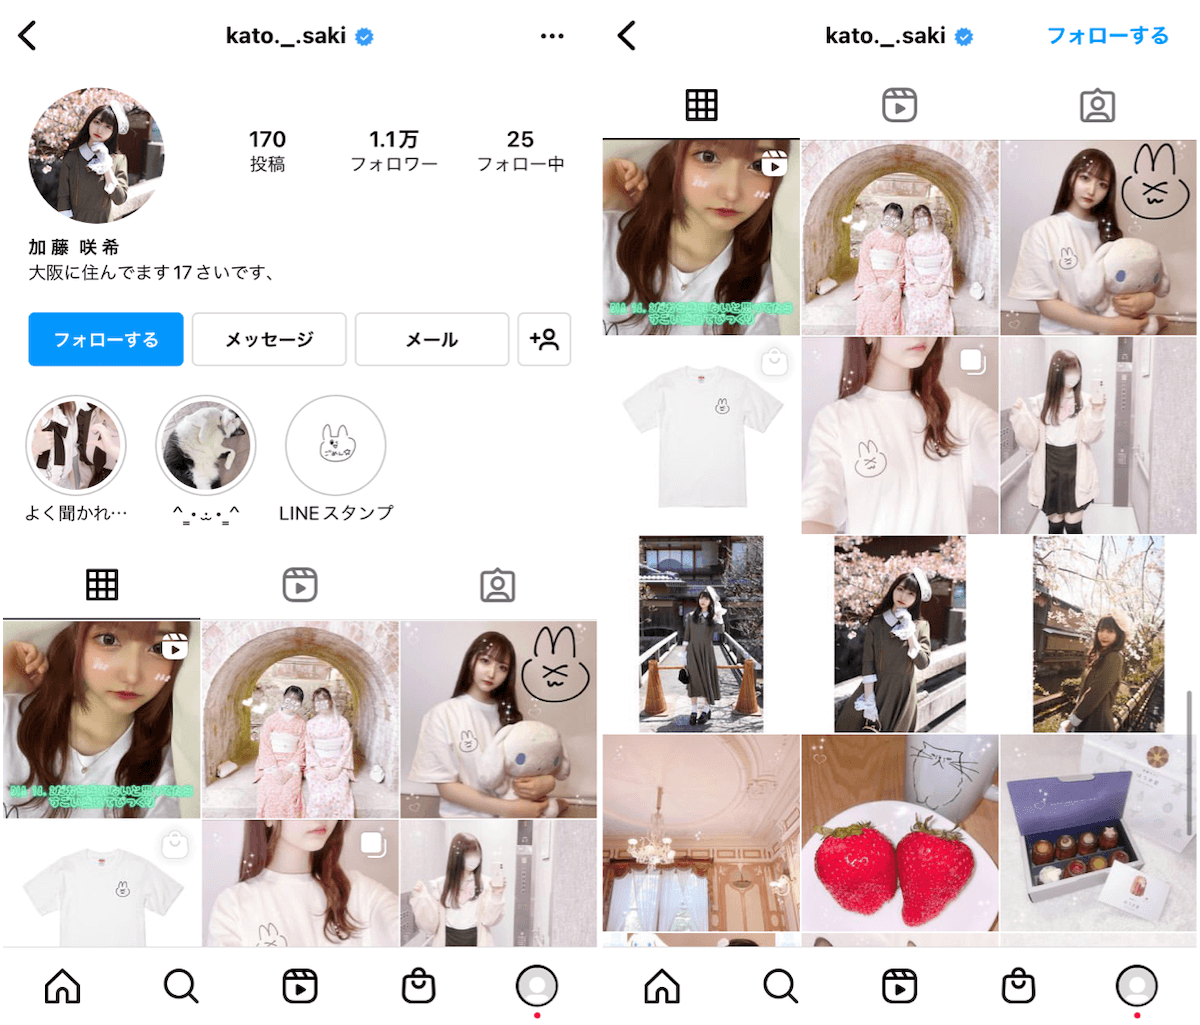 Instagram-high-school-cosmetic-kato._.saki